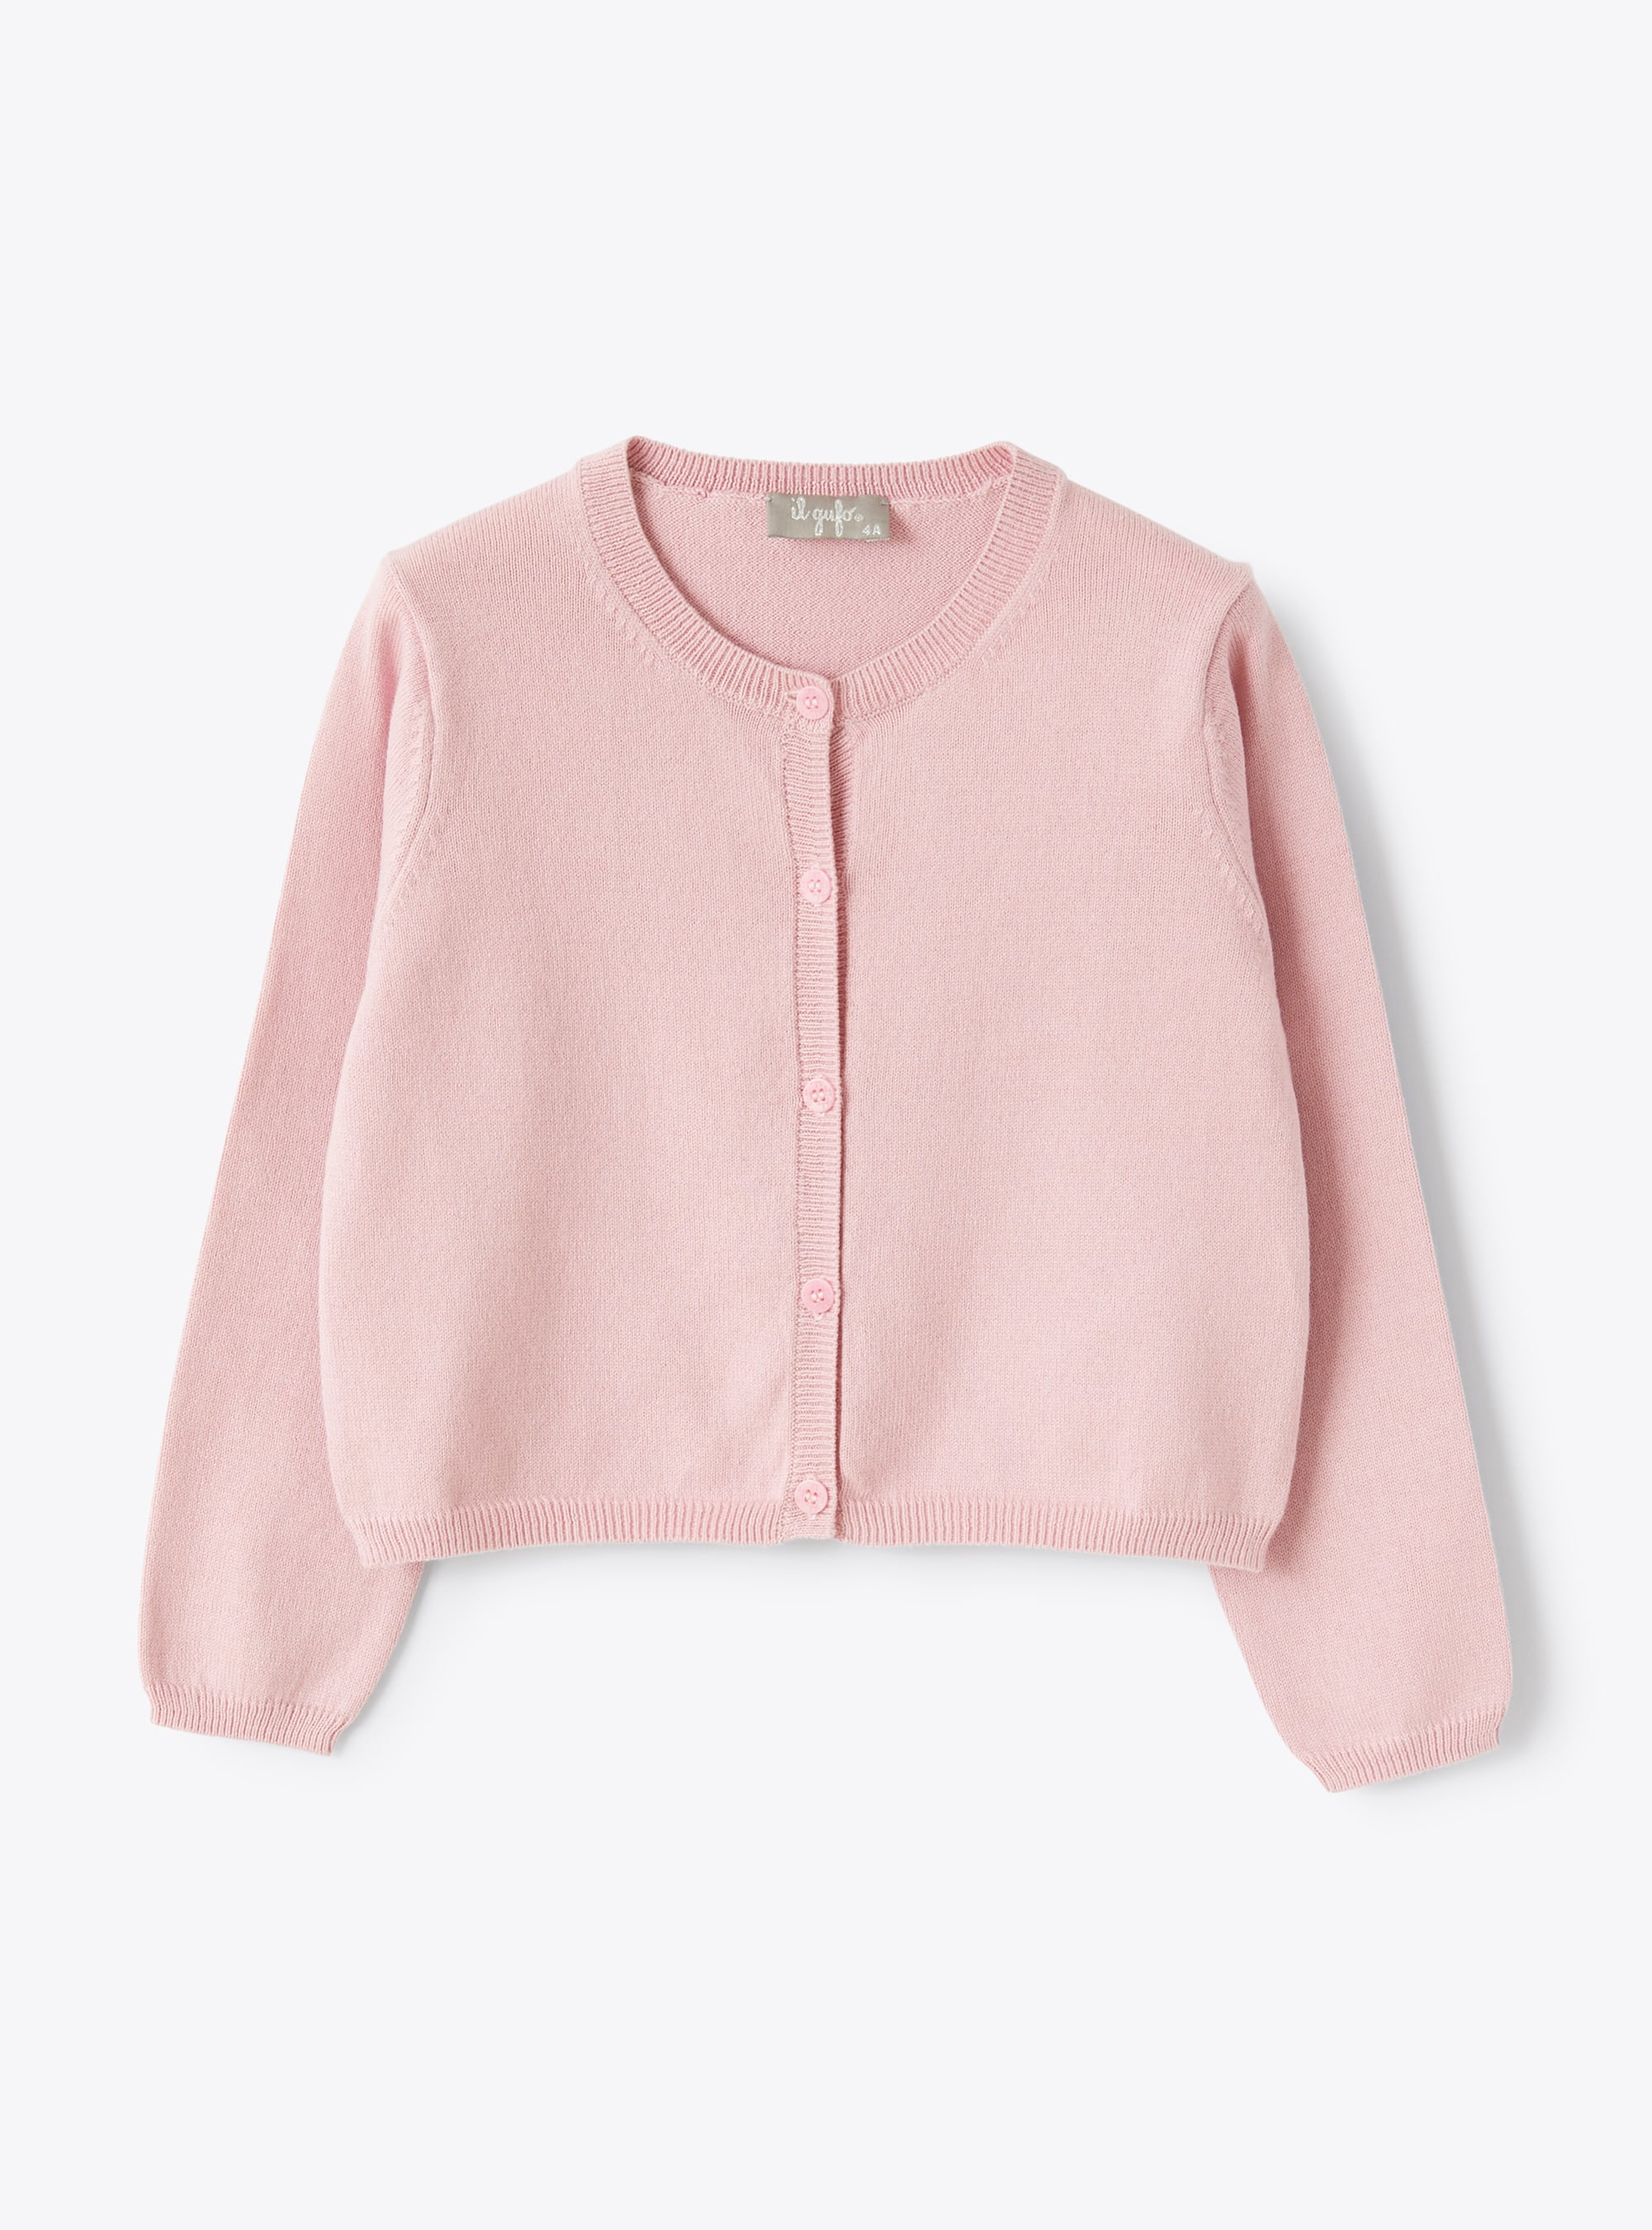 Cardigan in pink organic cotton - Pink | Il Gufo